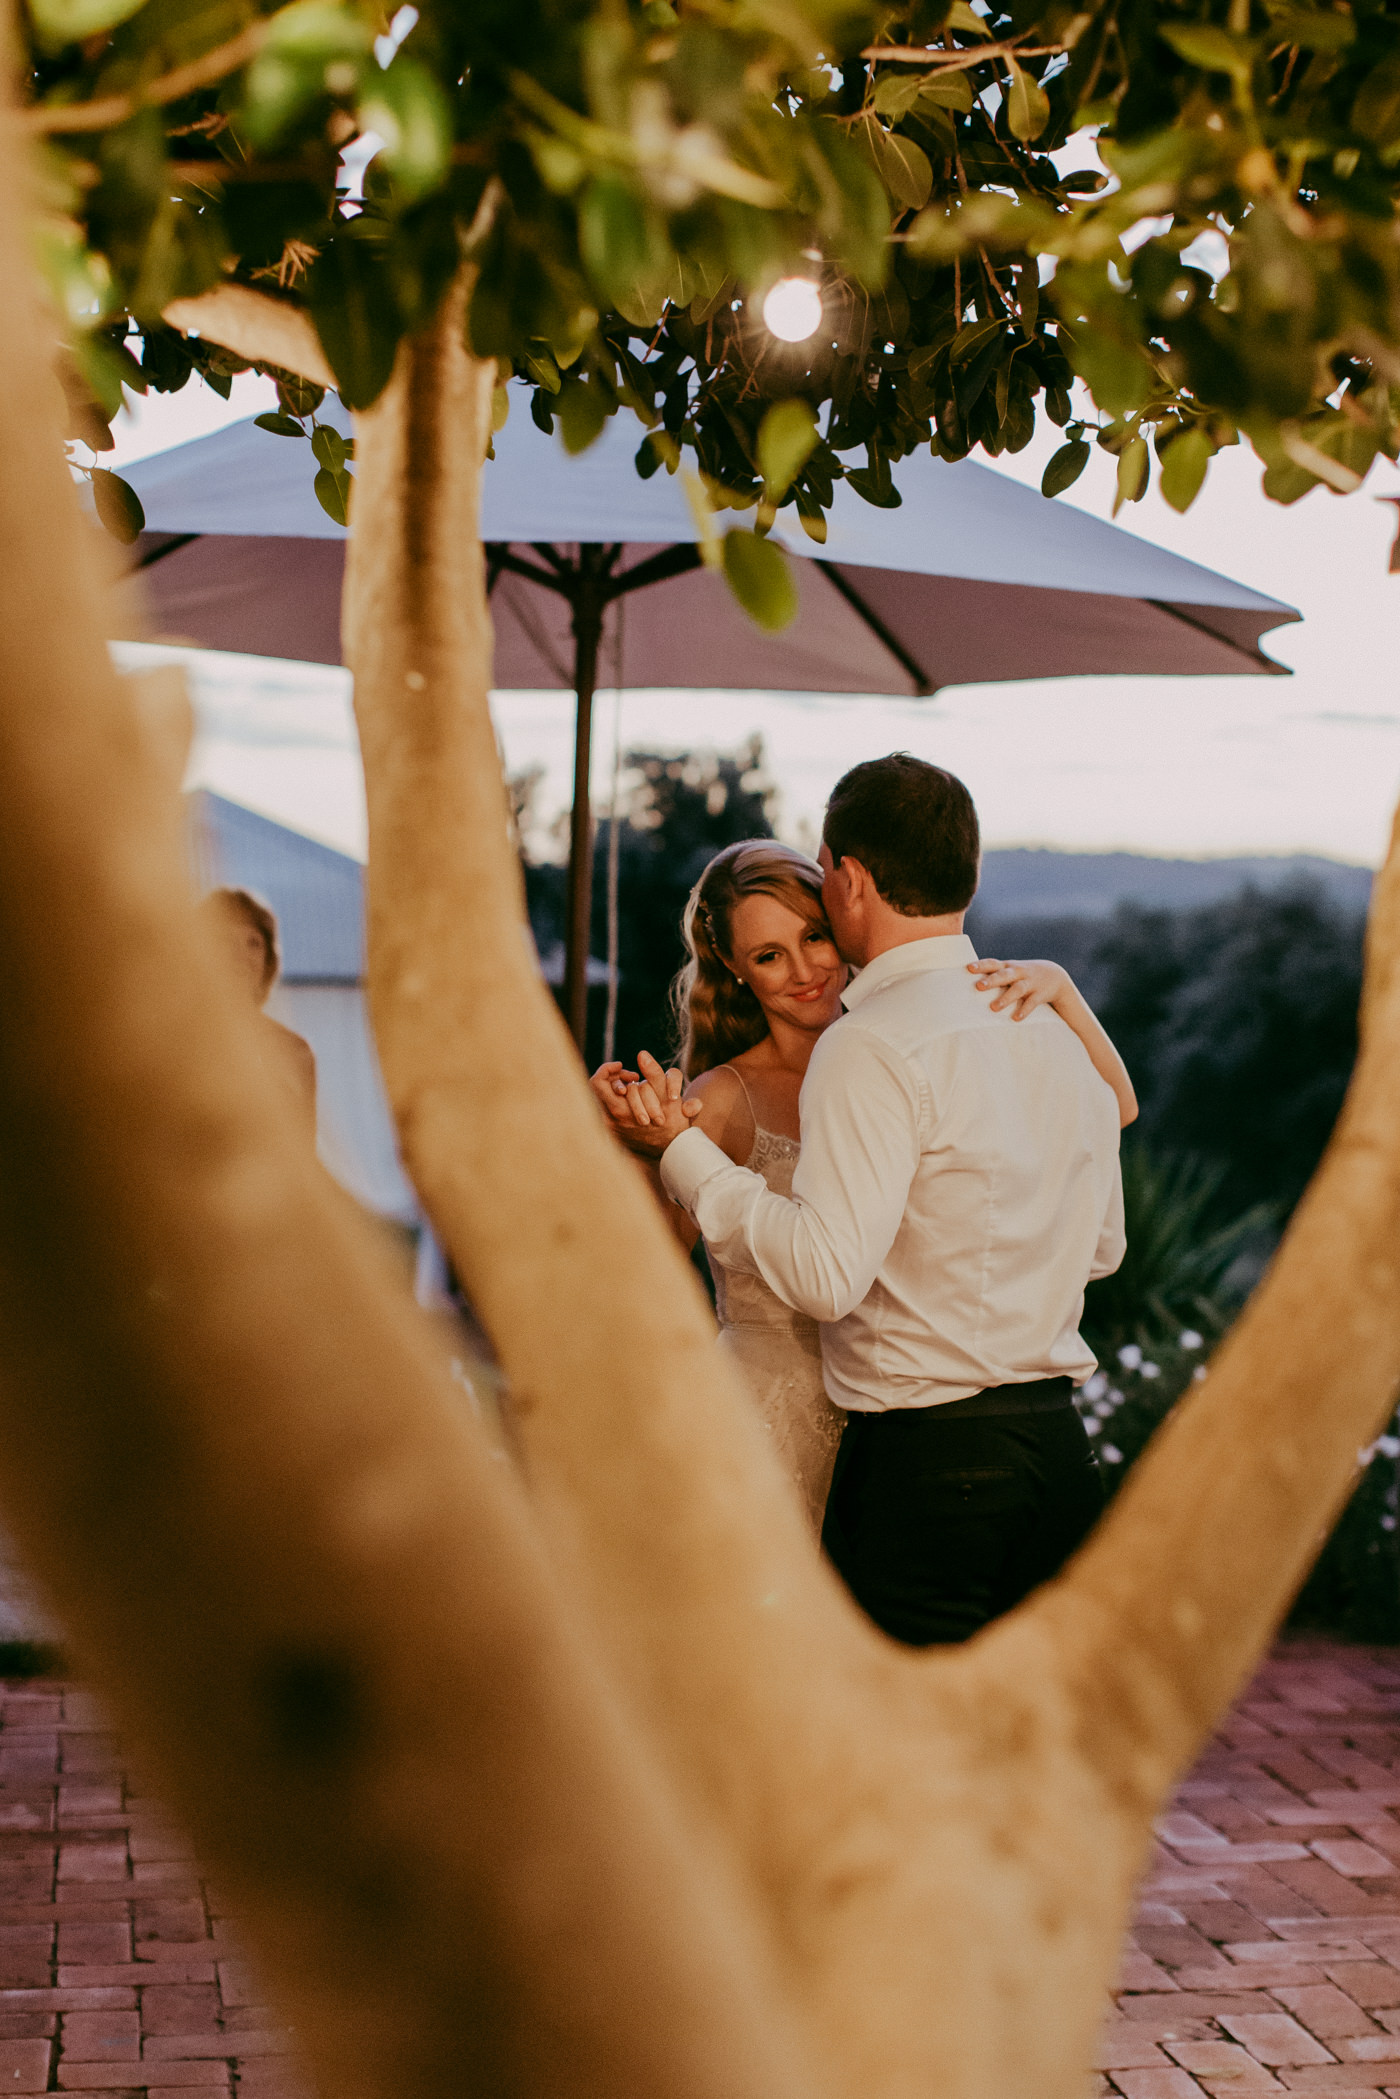 Anthony & Eliet - Wagga Wagga Wedding - Country NSW - Samantha Heather Photography-171.jpg